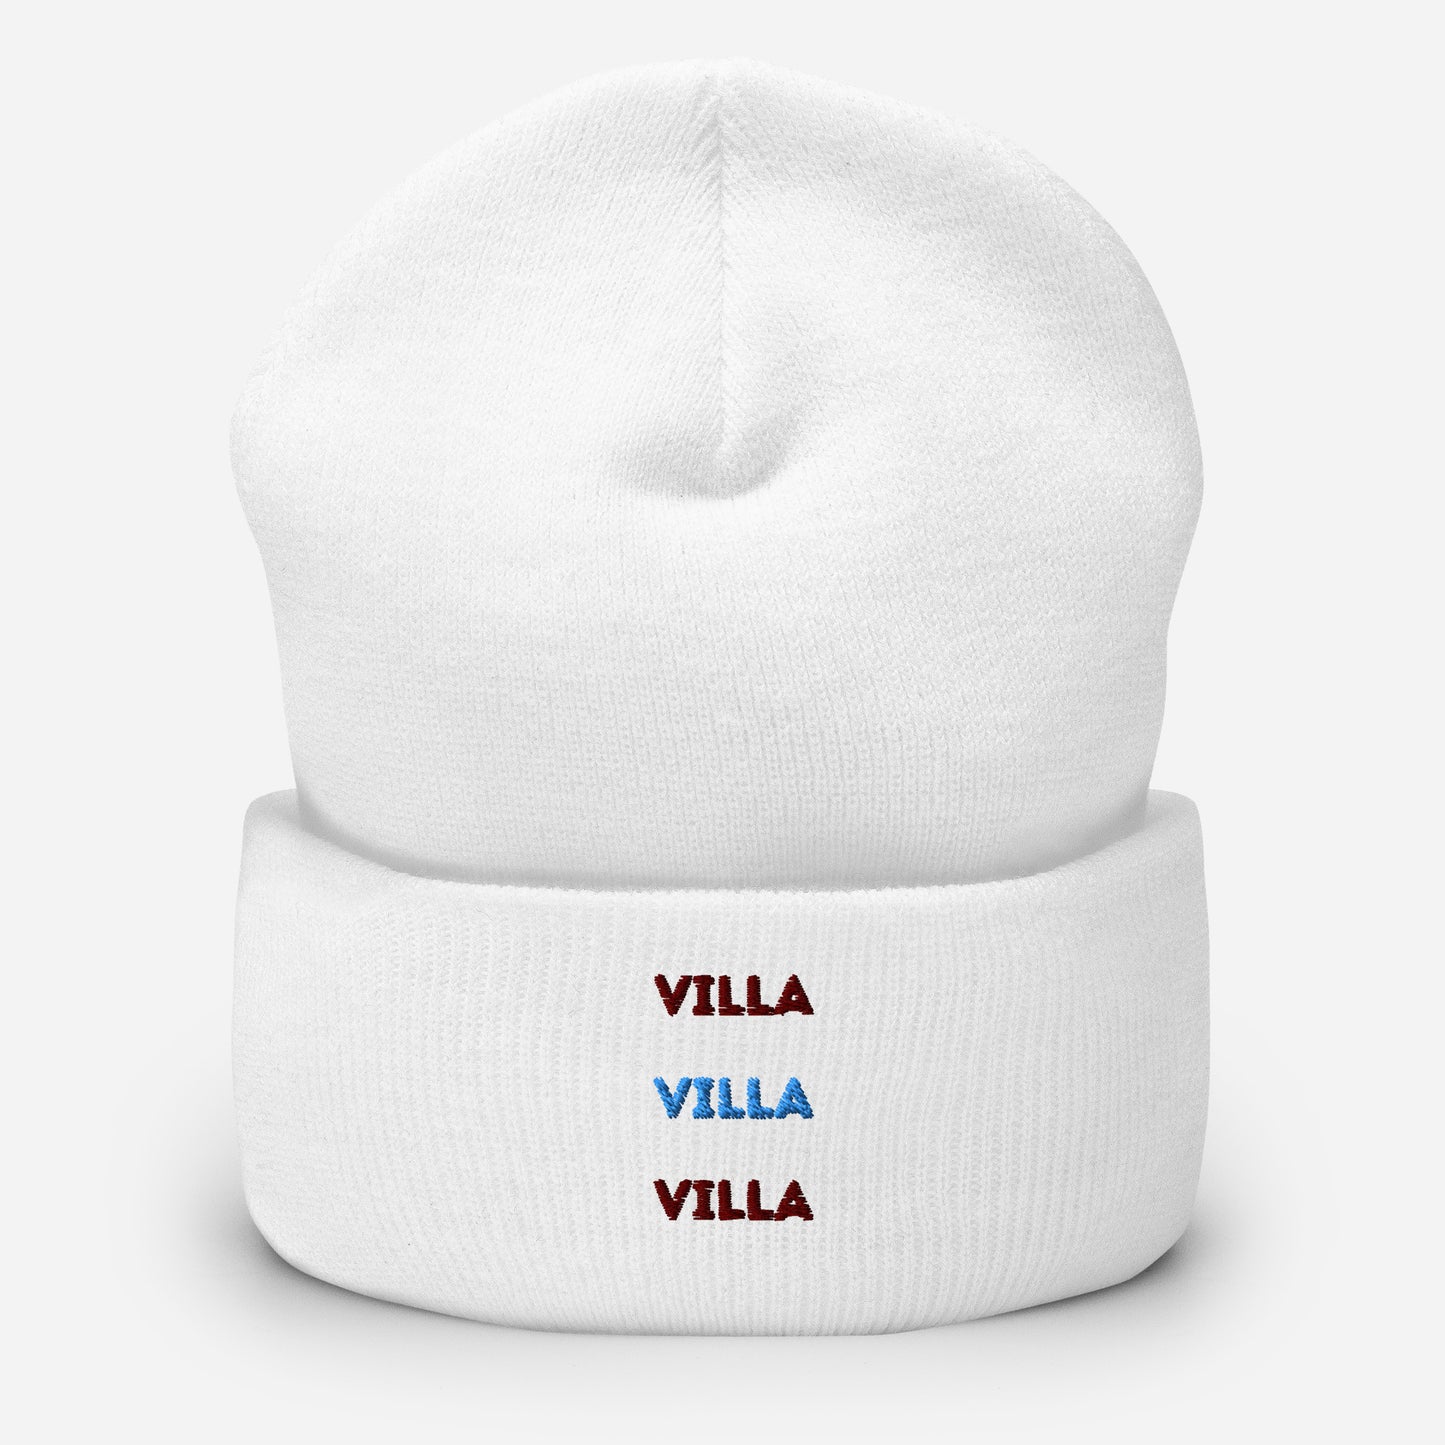 Villa Villa Villa Cuffed Beanie Hat